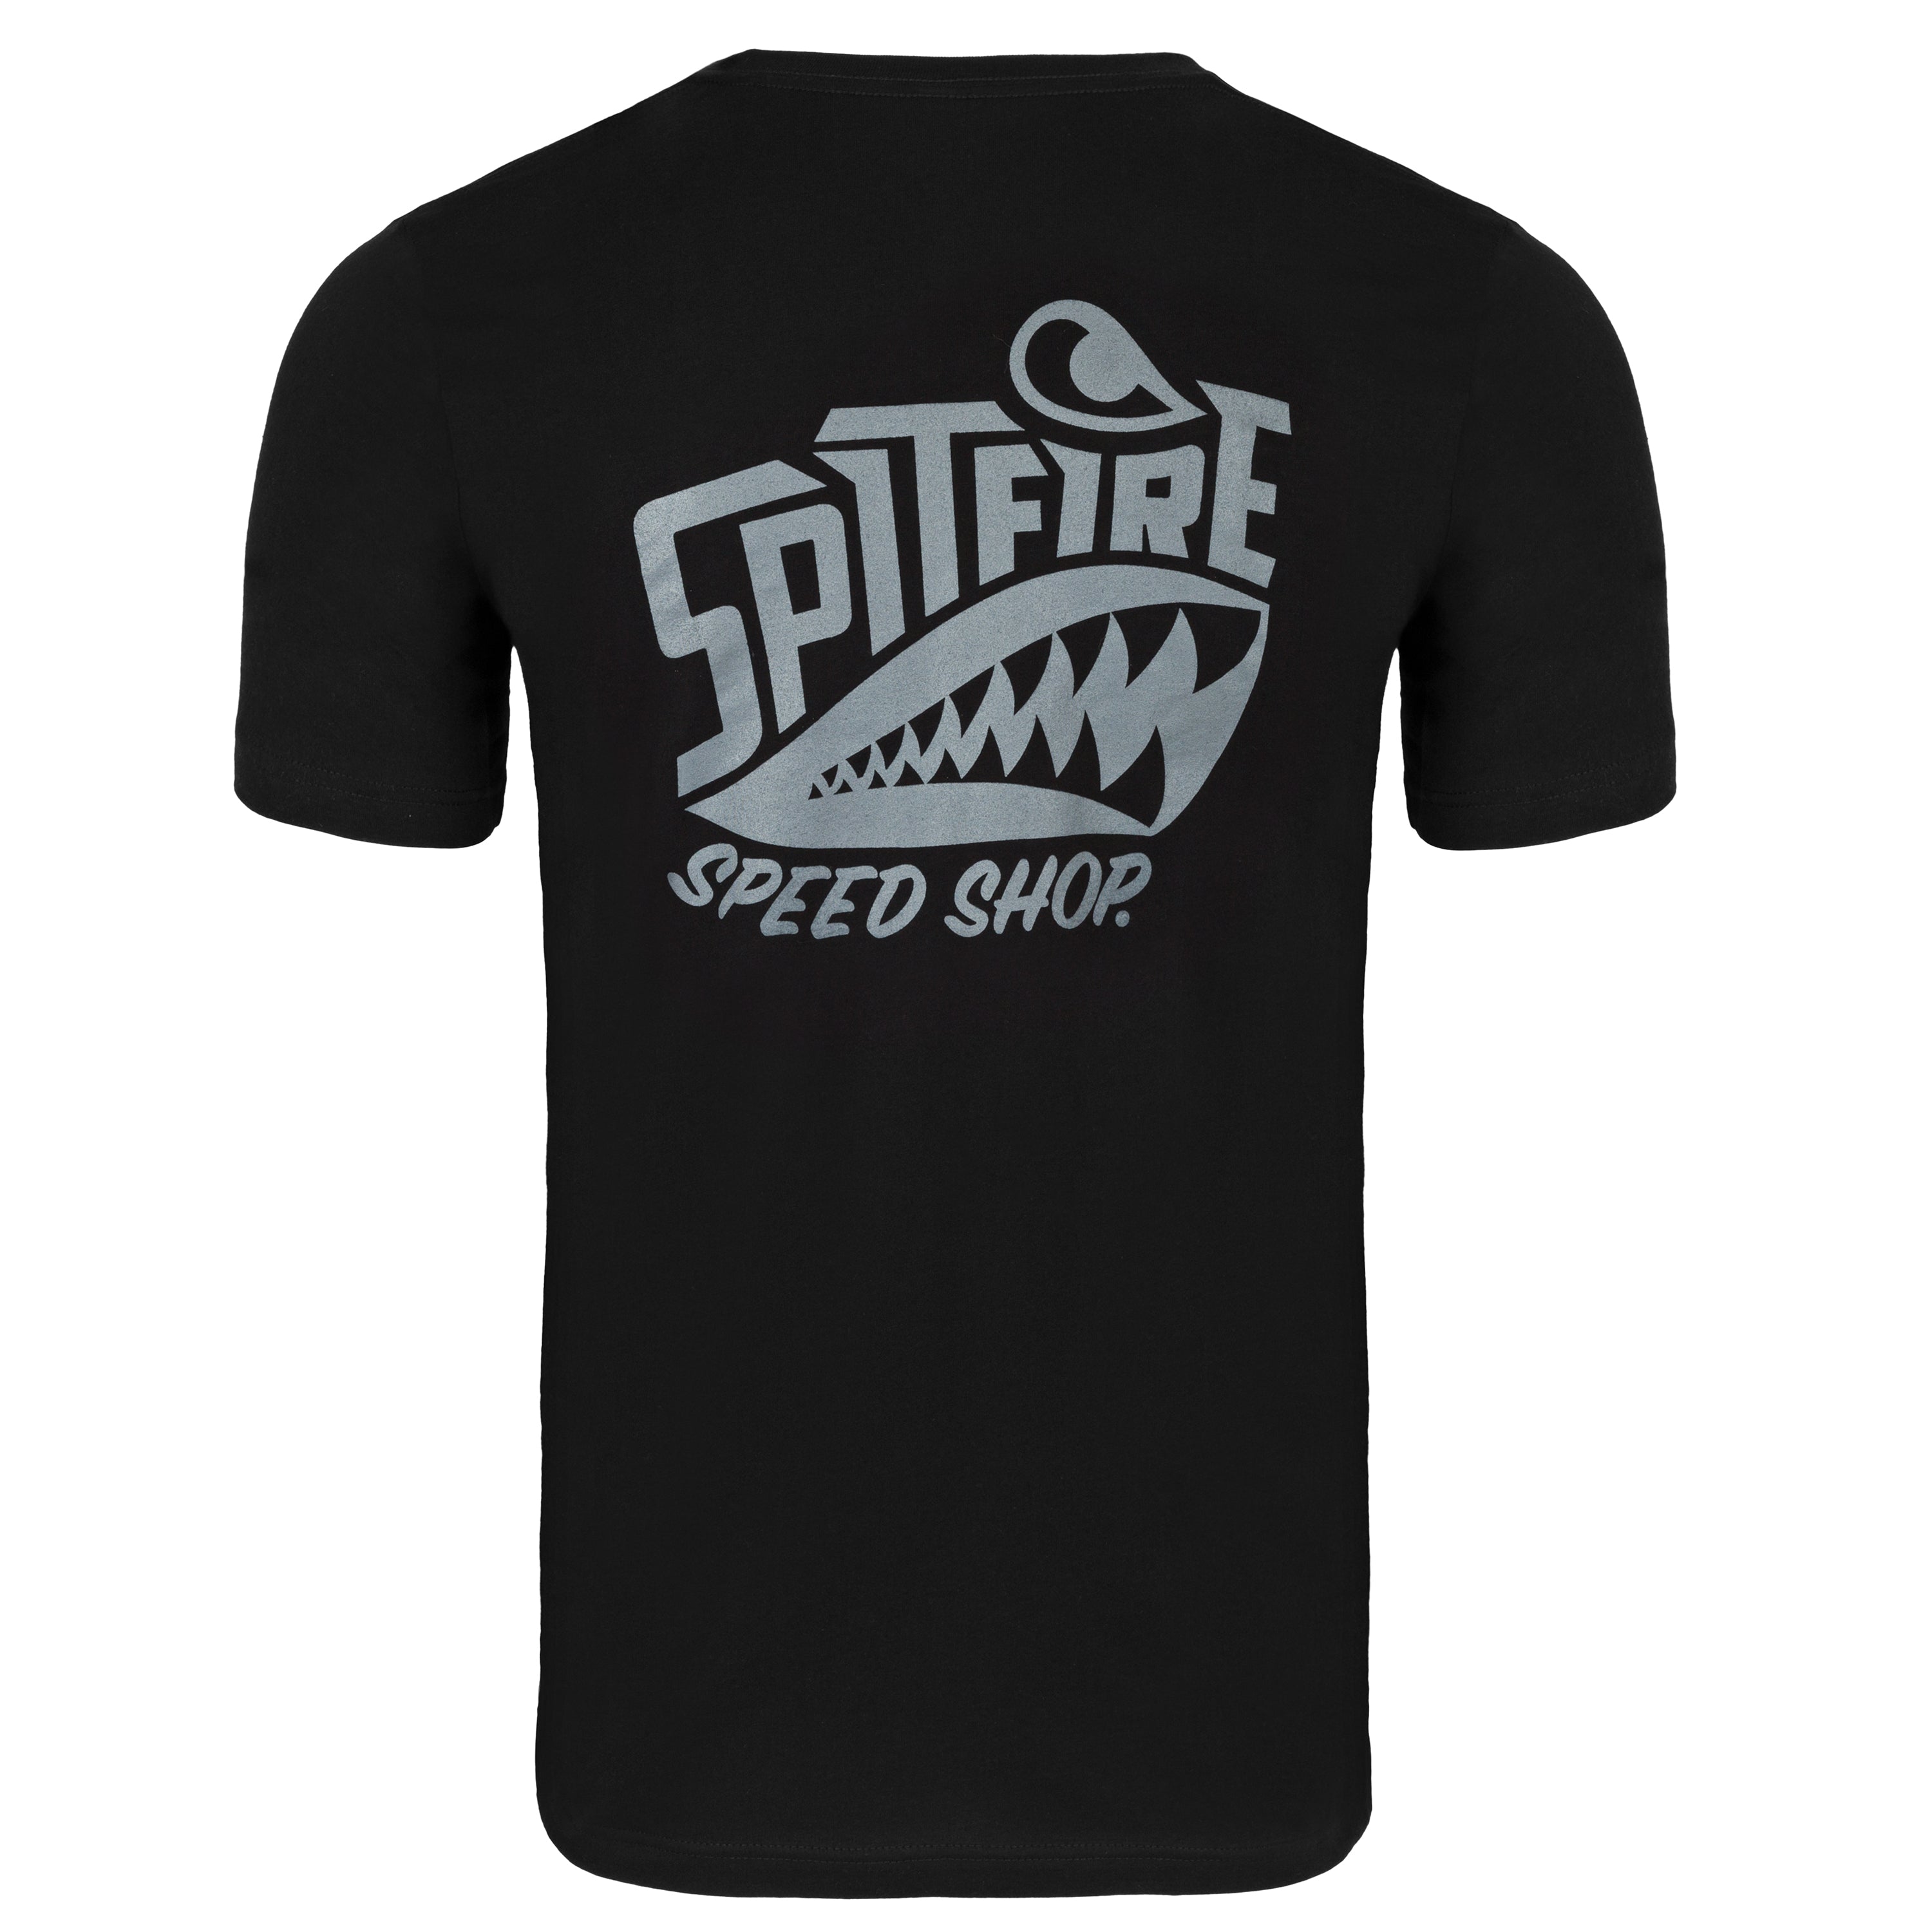 Spitfire Black T-Shirt With Grey Logo